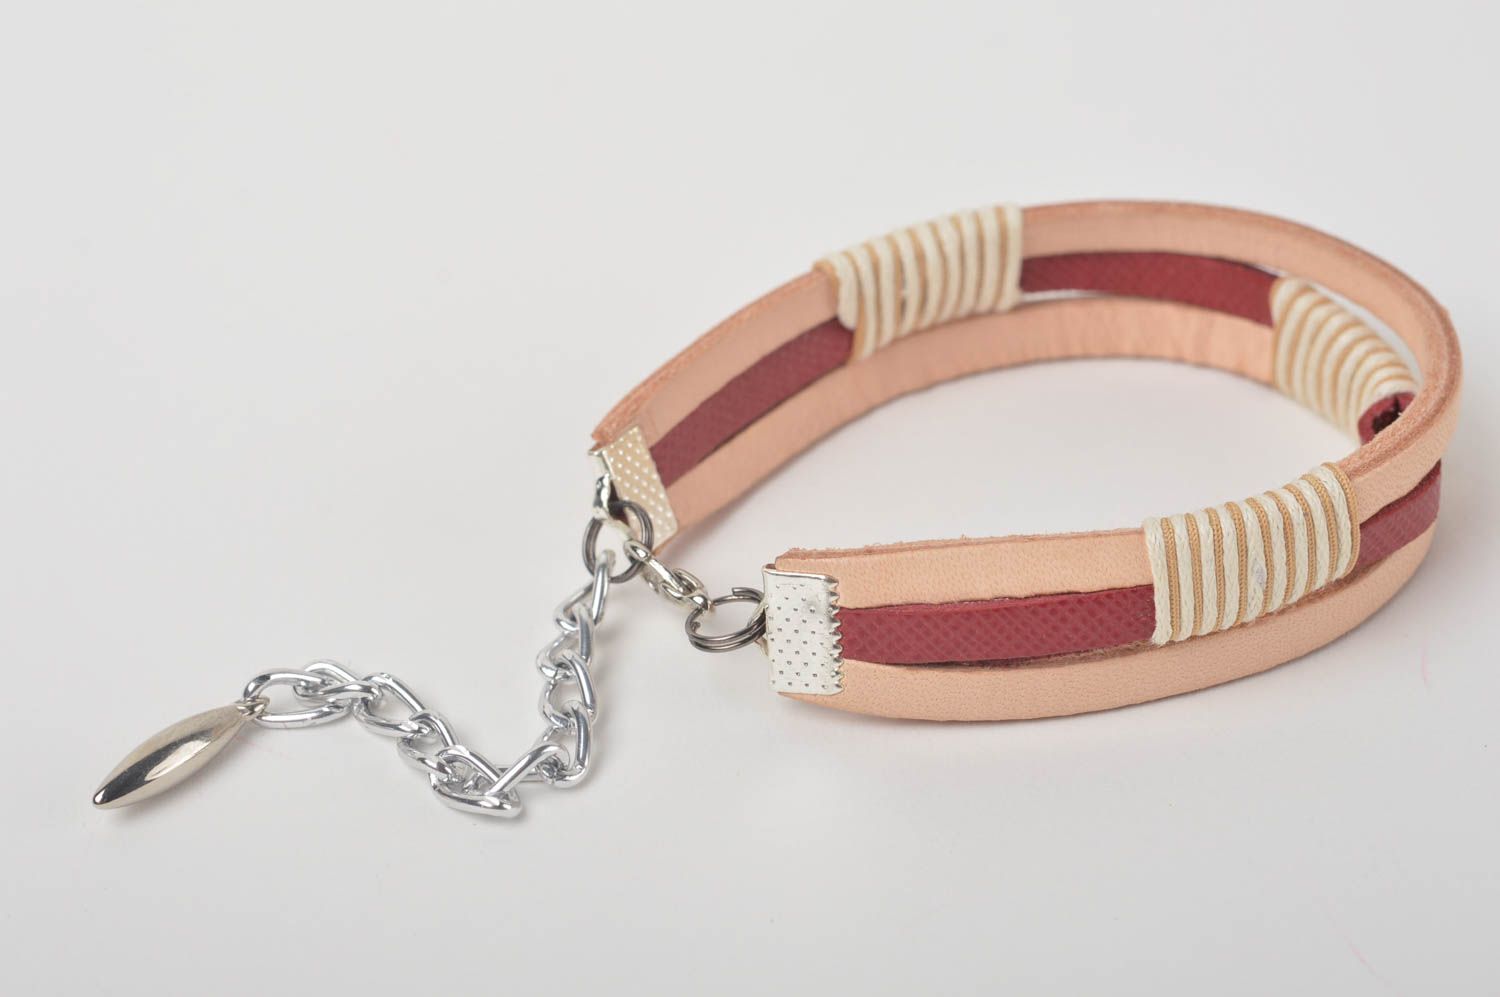 Unusual handmade leather wrist bracelet stylish bracelet designs gifts for her photo 3